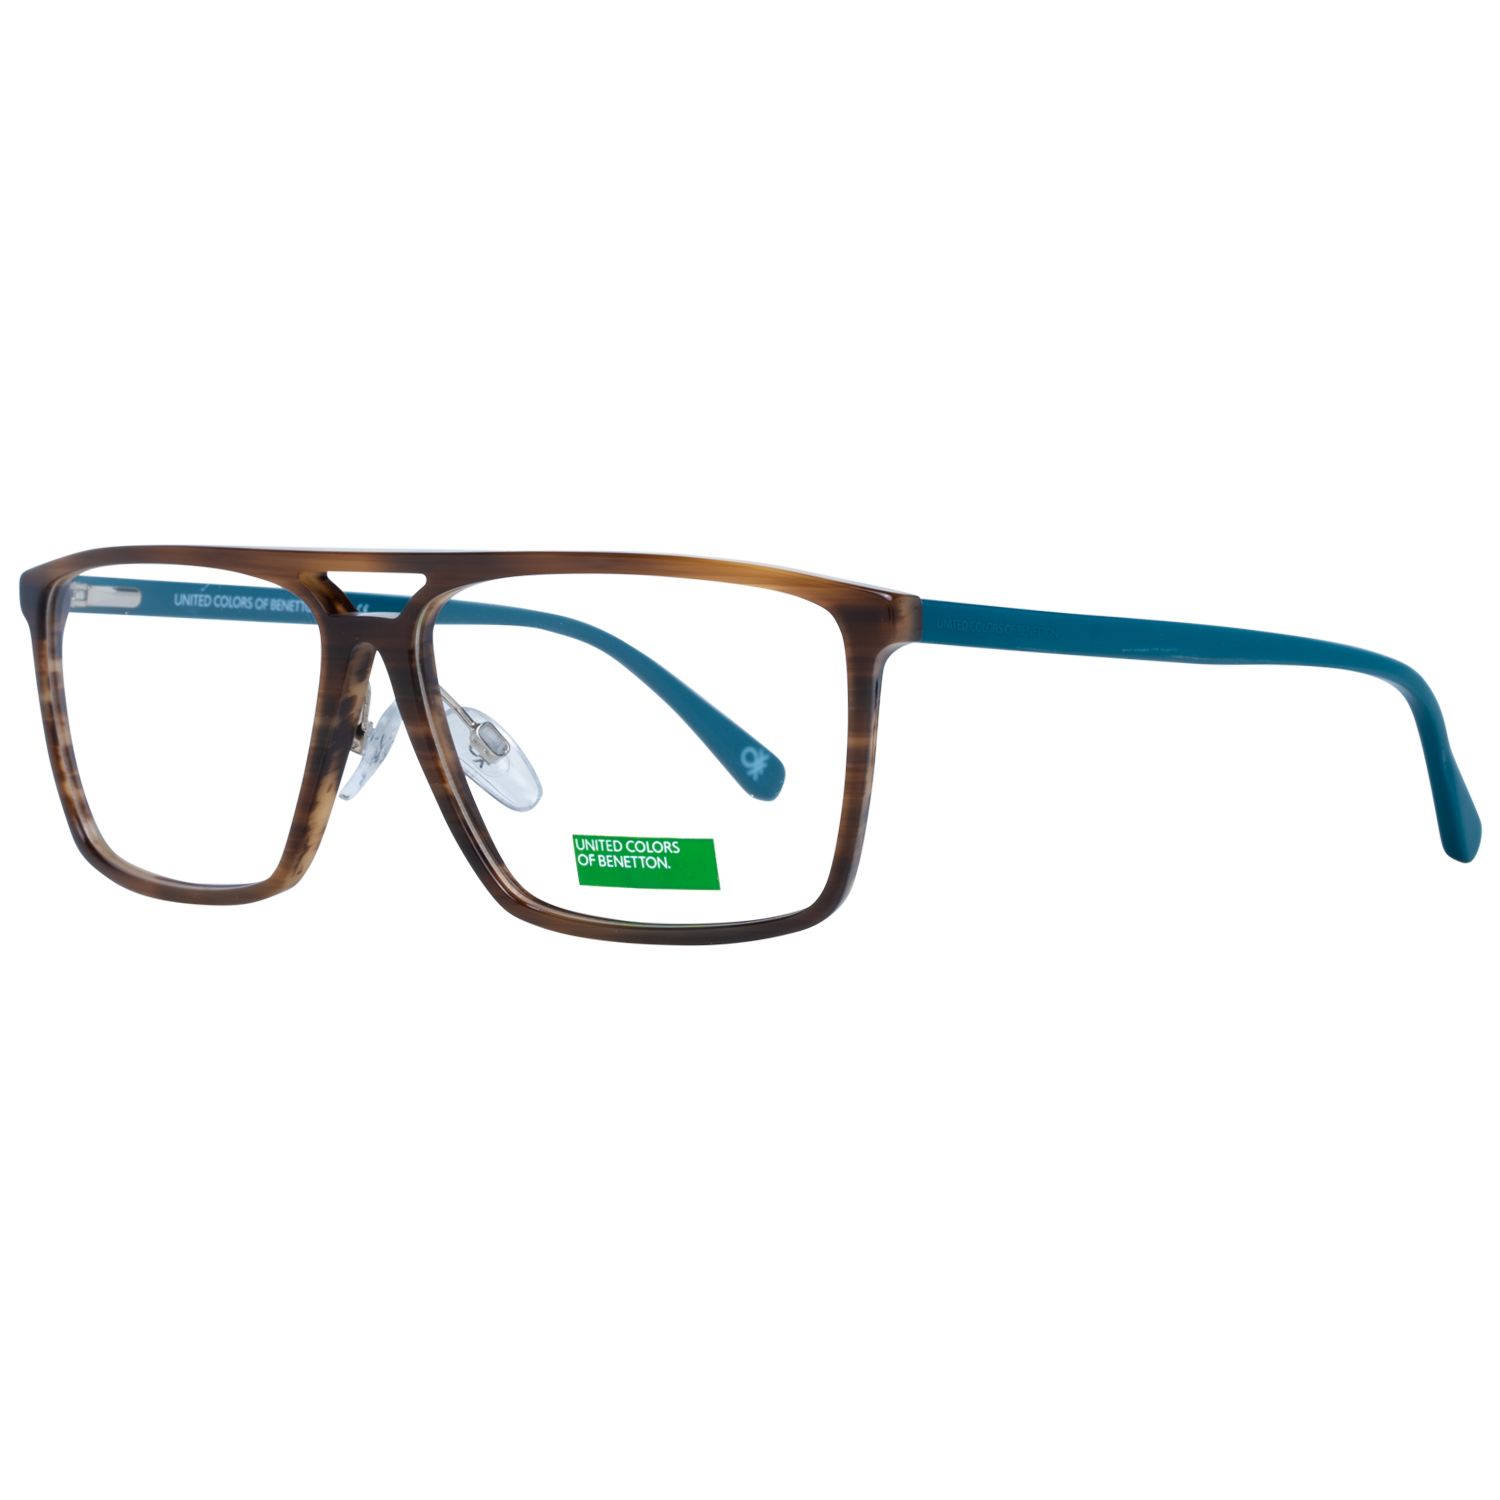 Benetton Frames Benetton Optical Frame BEO1000 155 58 Eyeglasses Eyewear UK USA Australia 